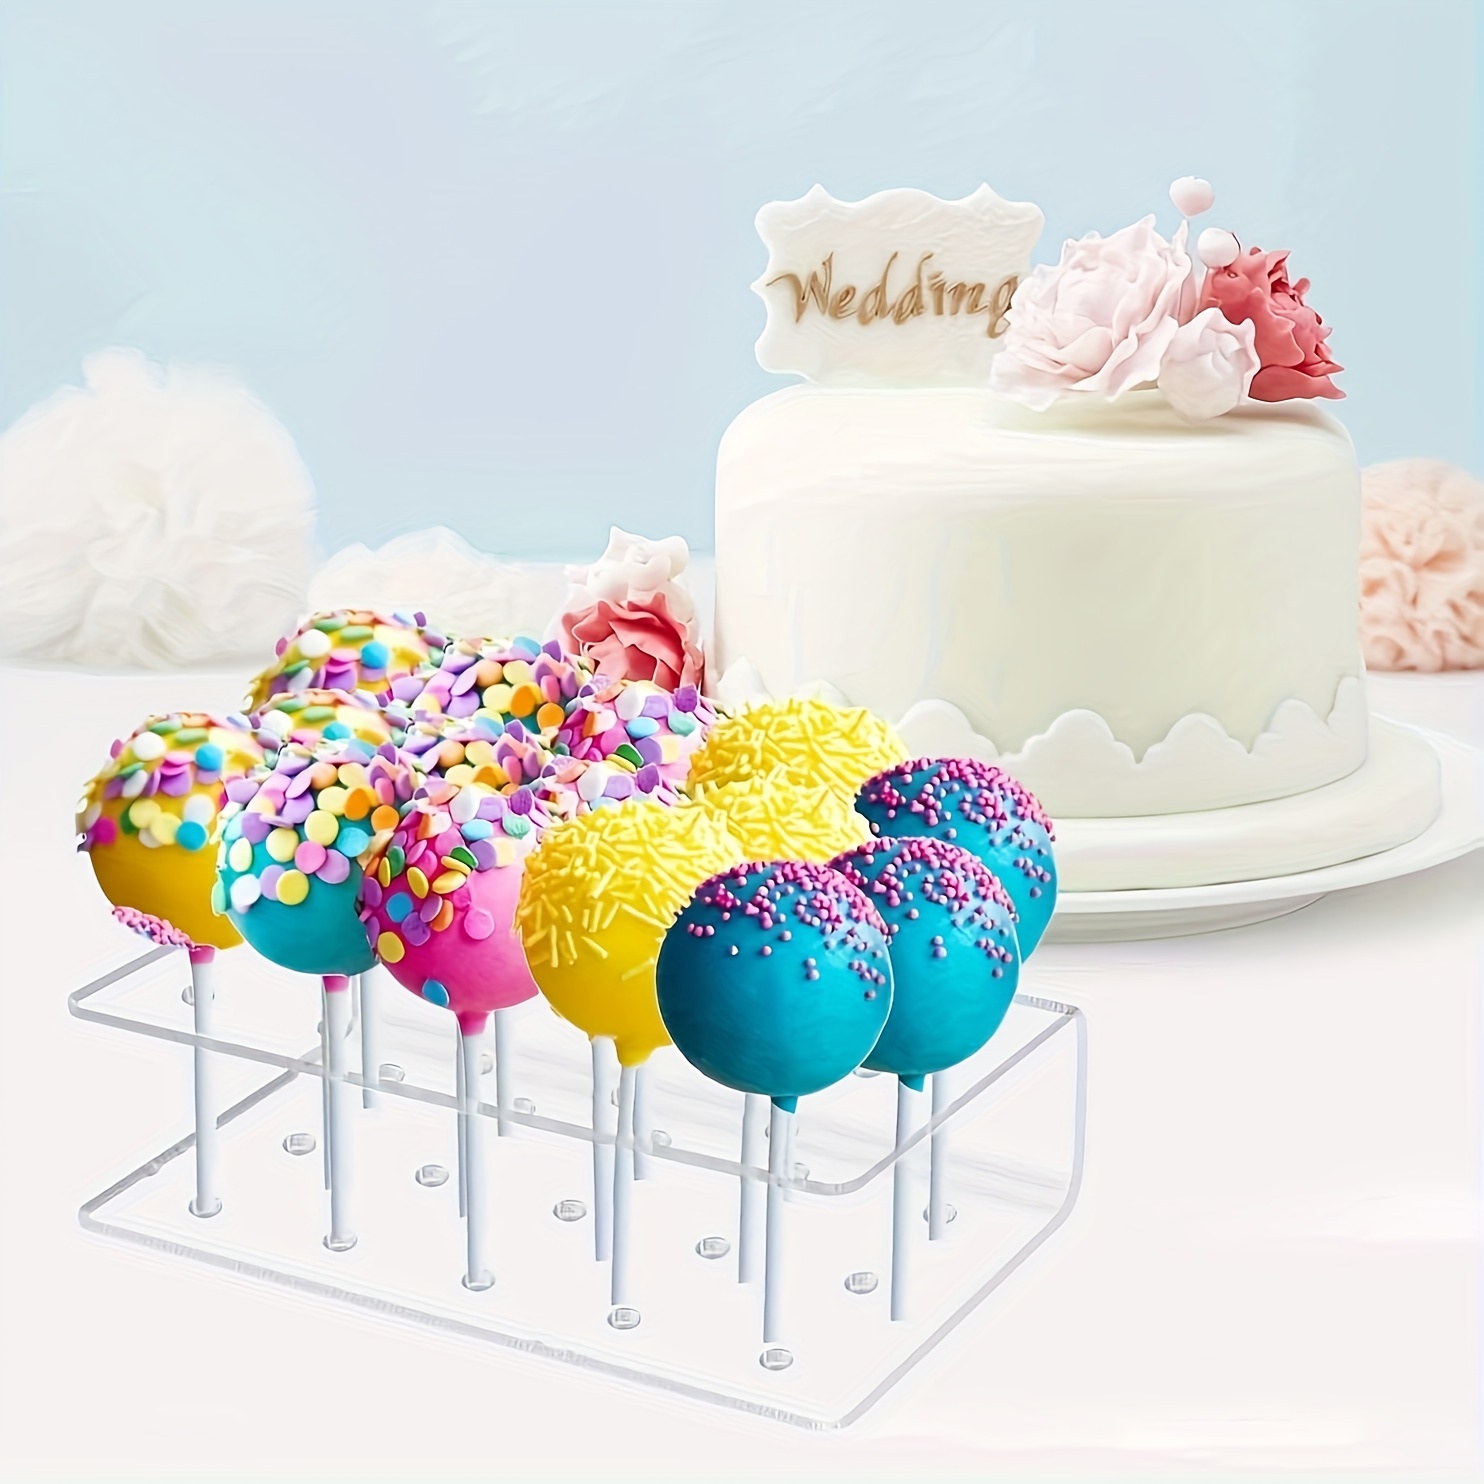 Cake Pops Acrylic Display Stand - Lollipop/Cake Pop Retail Store